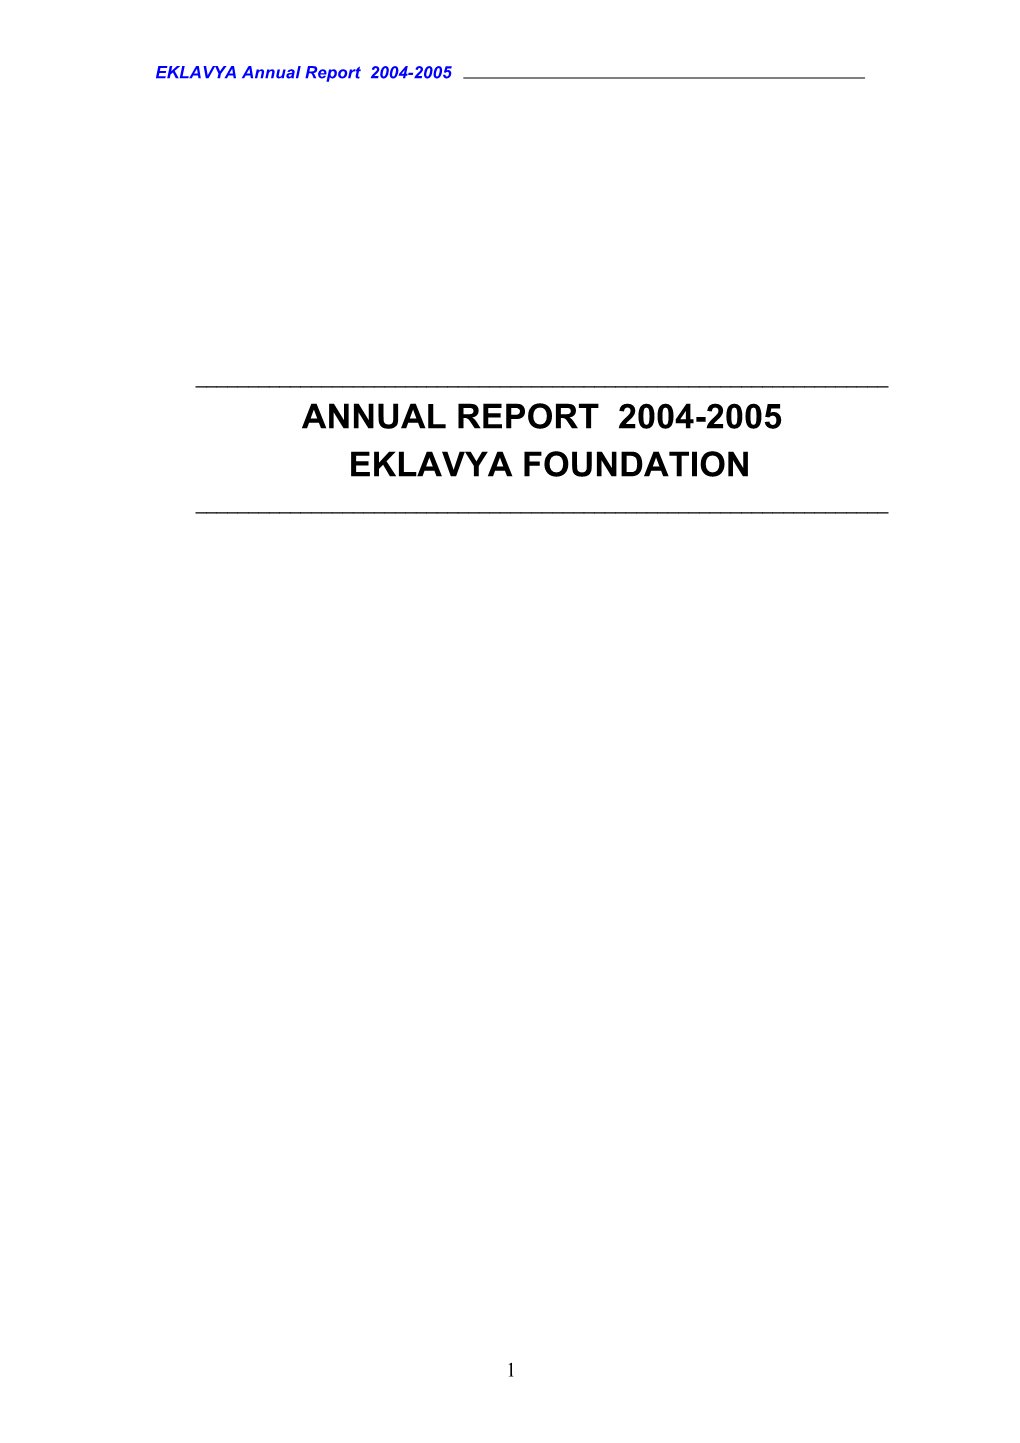 Annual Report 2004-0